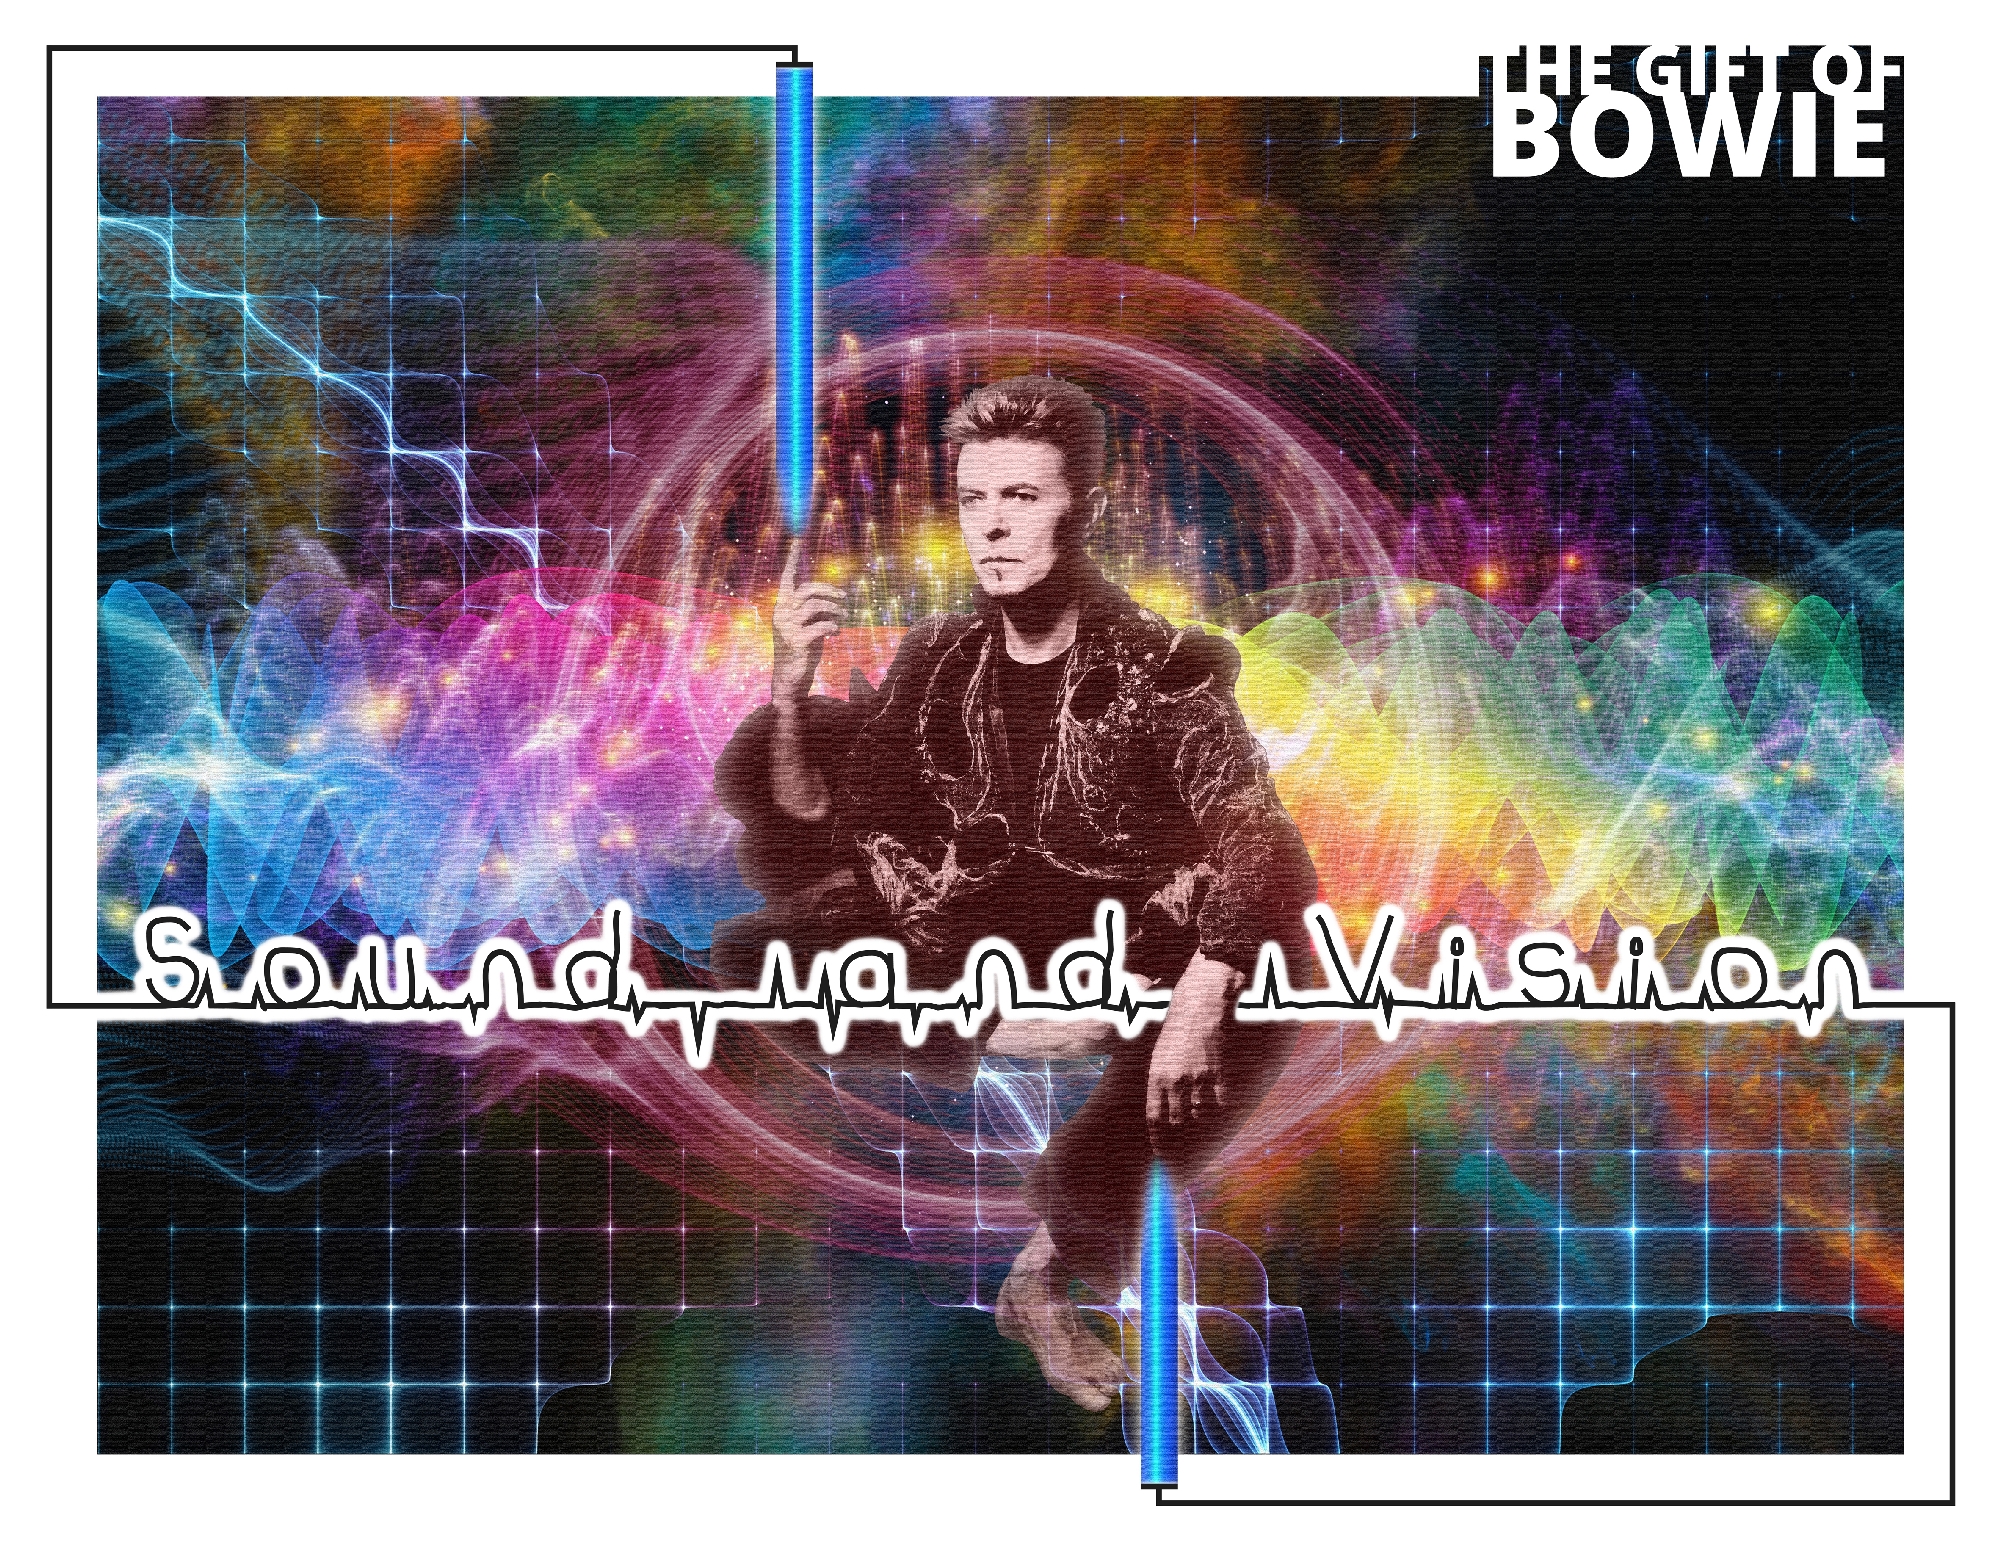 David Bowie Art Creation by Steve Stachini - Sound And Vision 80cm x 62cm